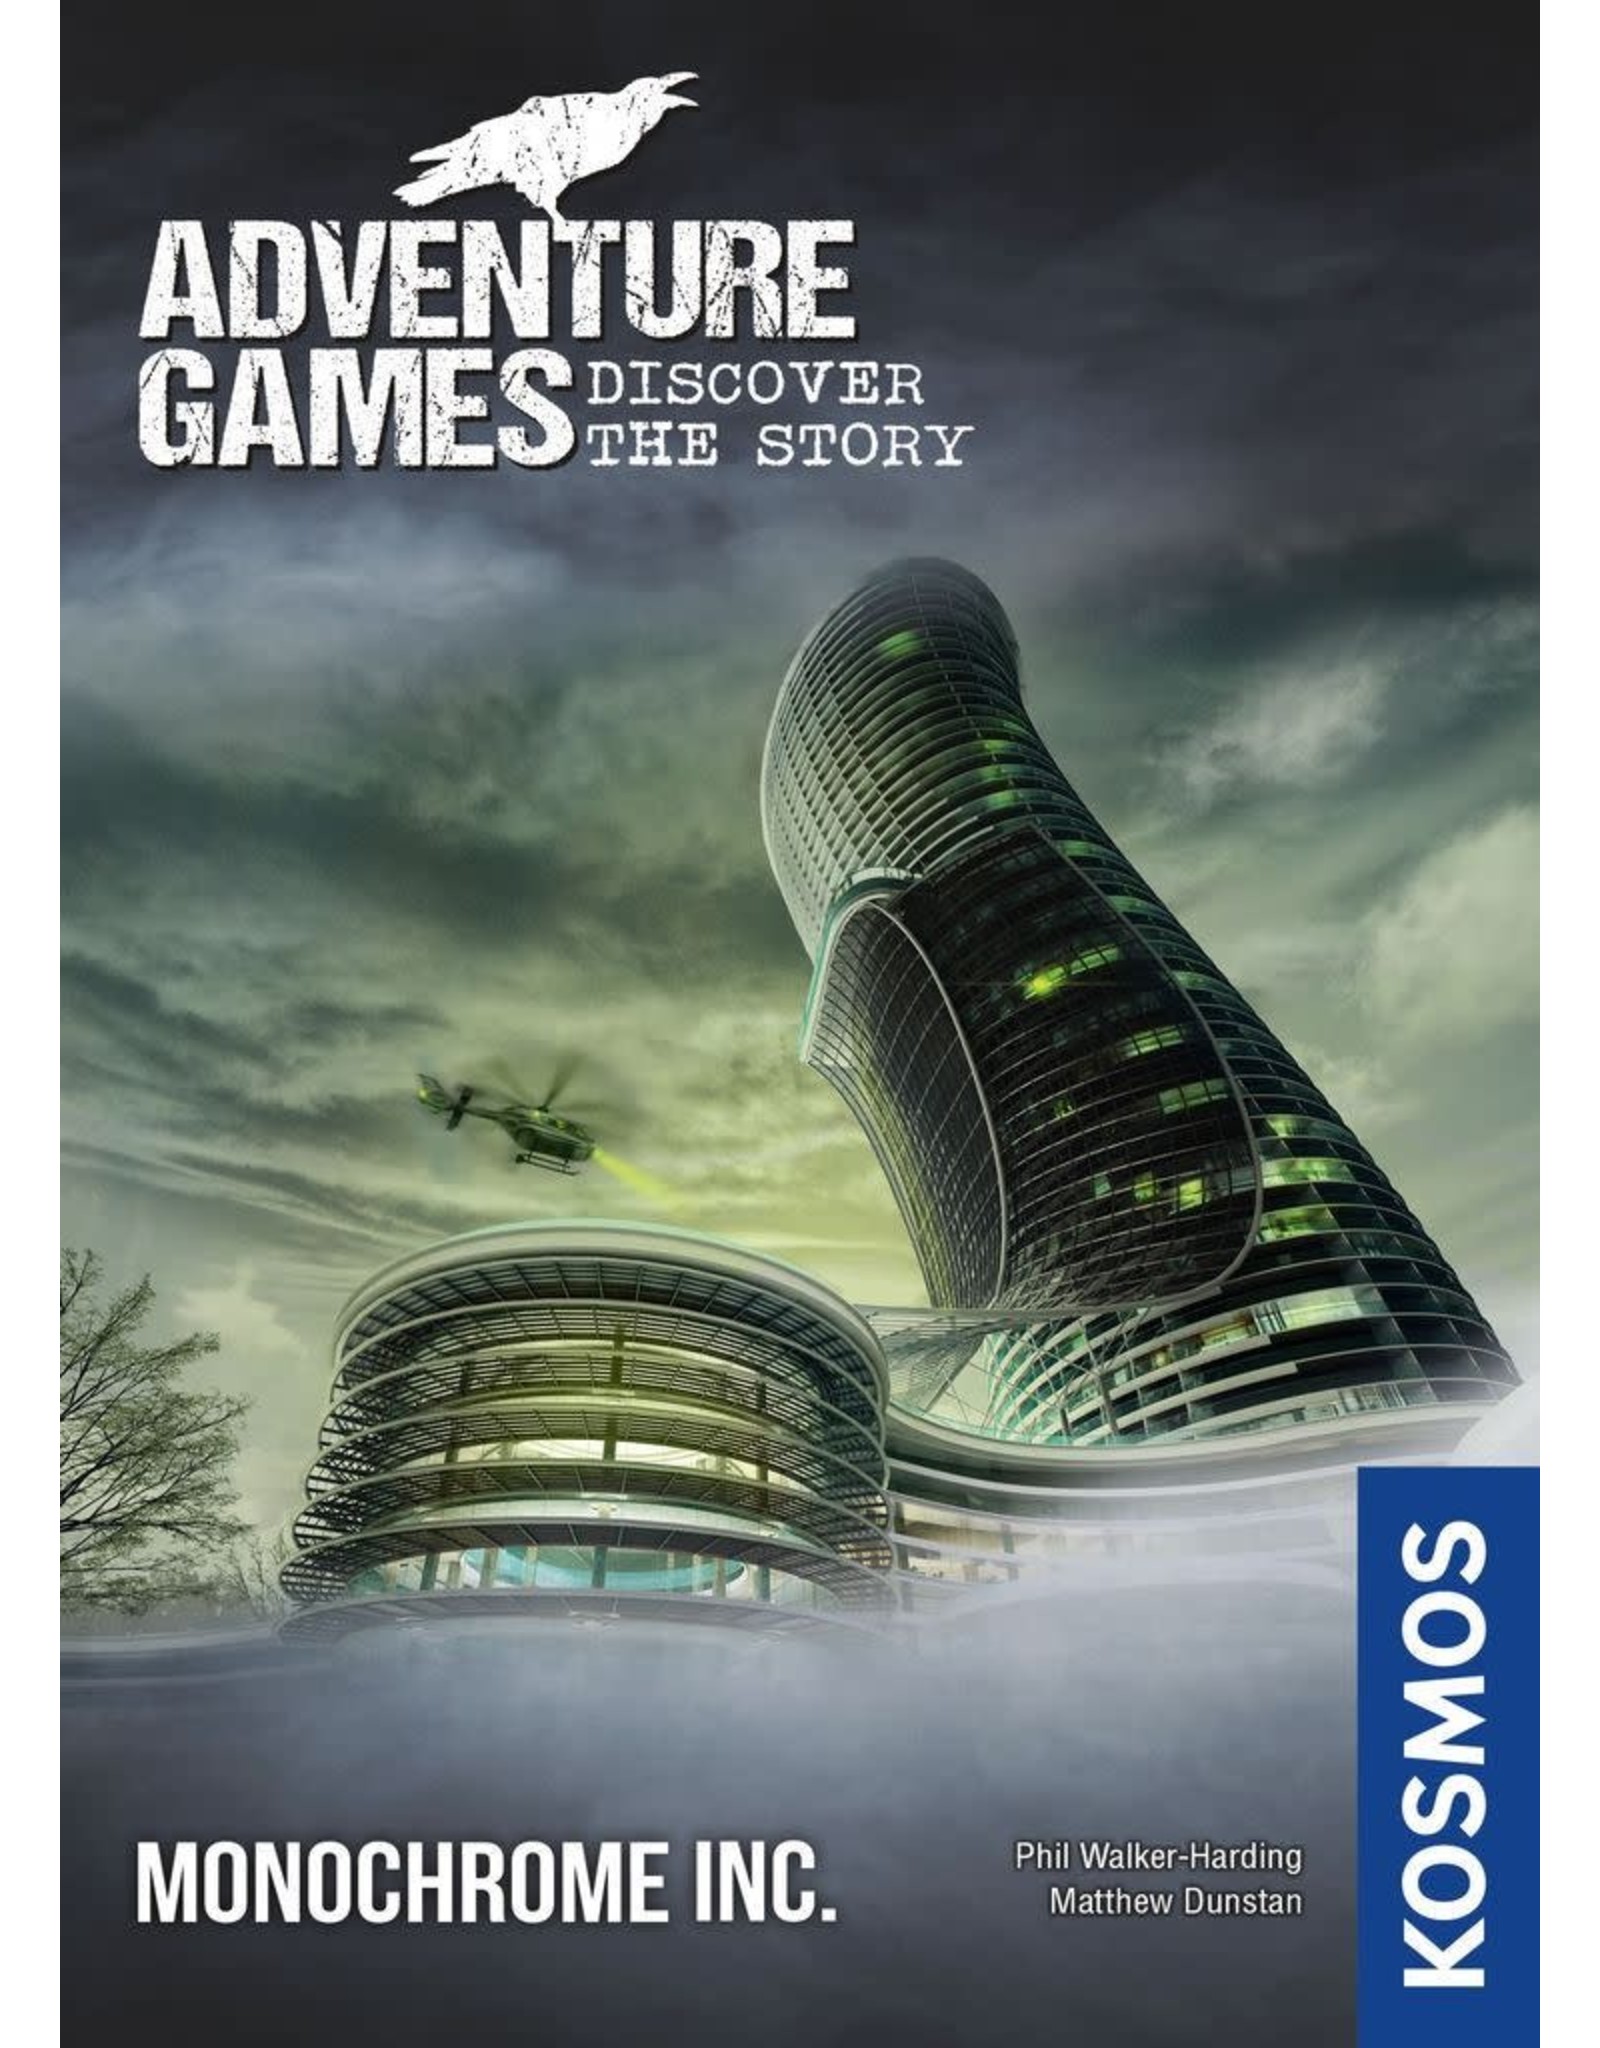 Adventure Games Monochrome Inc.